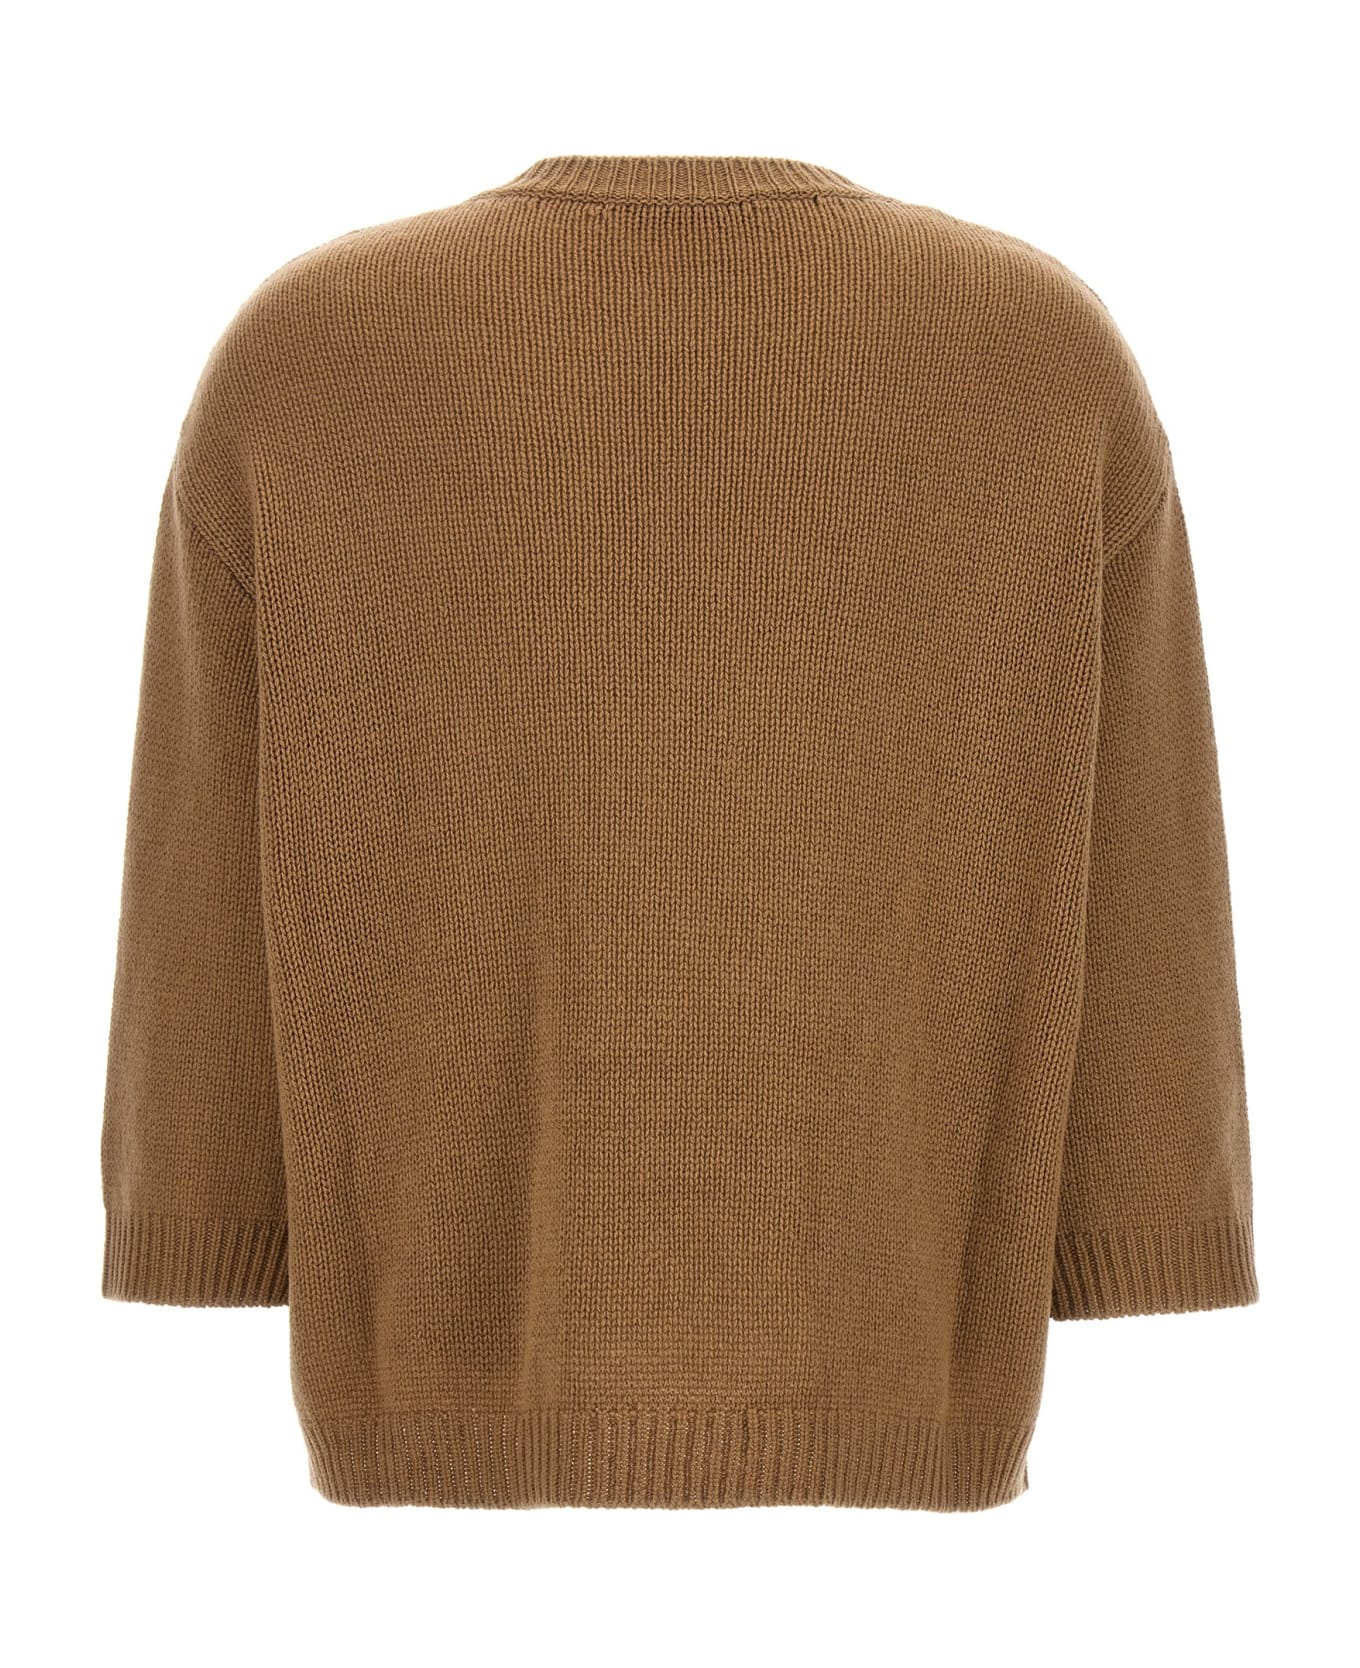 valentino torebka Sweater With Stud Detail - Beige